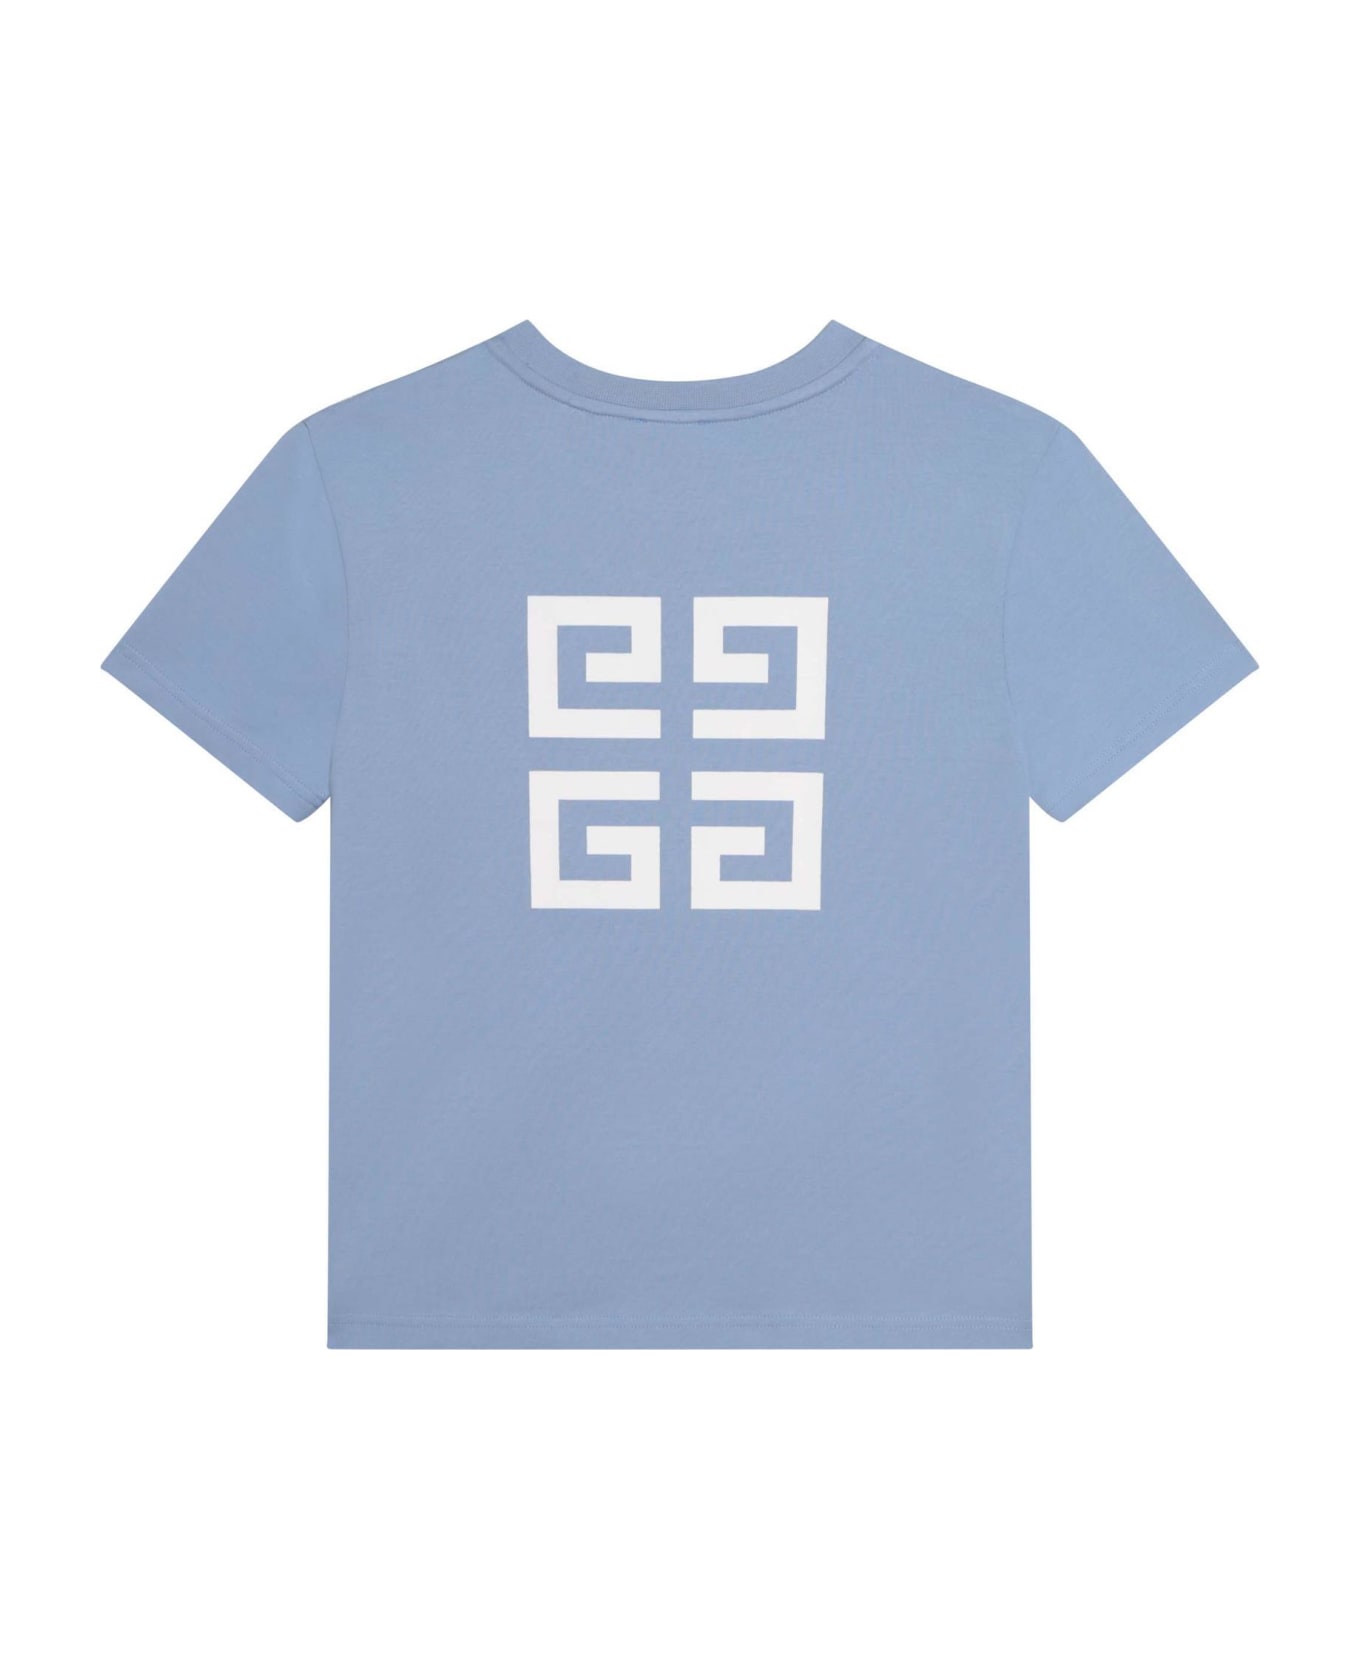 Givenchy Printed T-shirt - Light blue